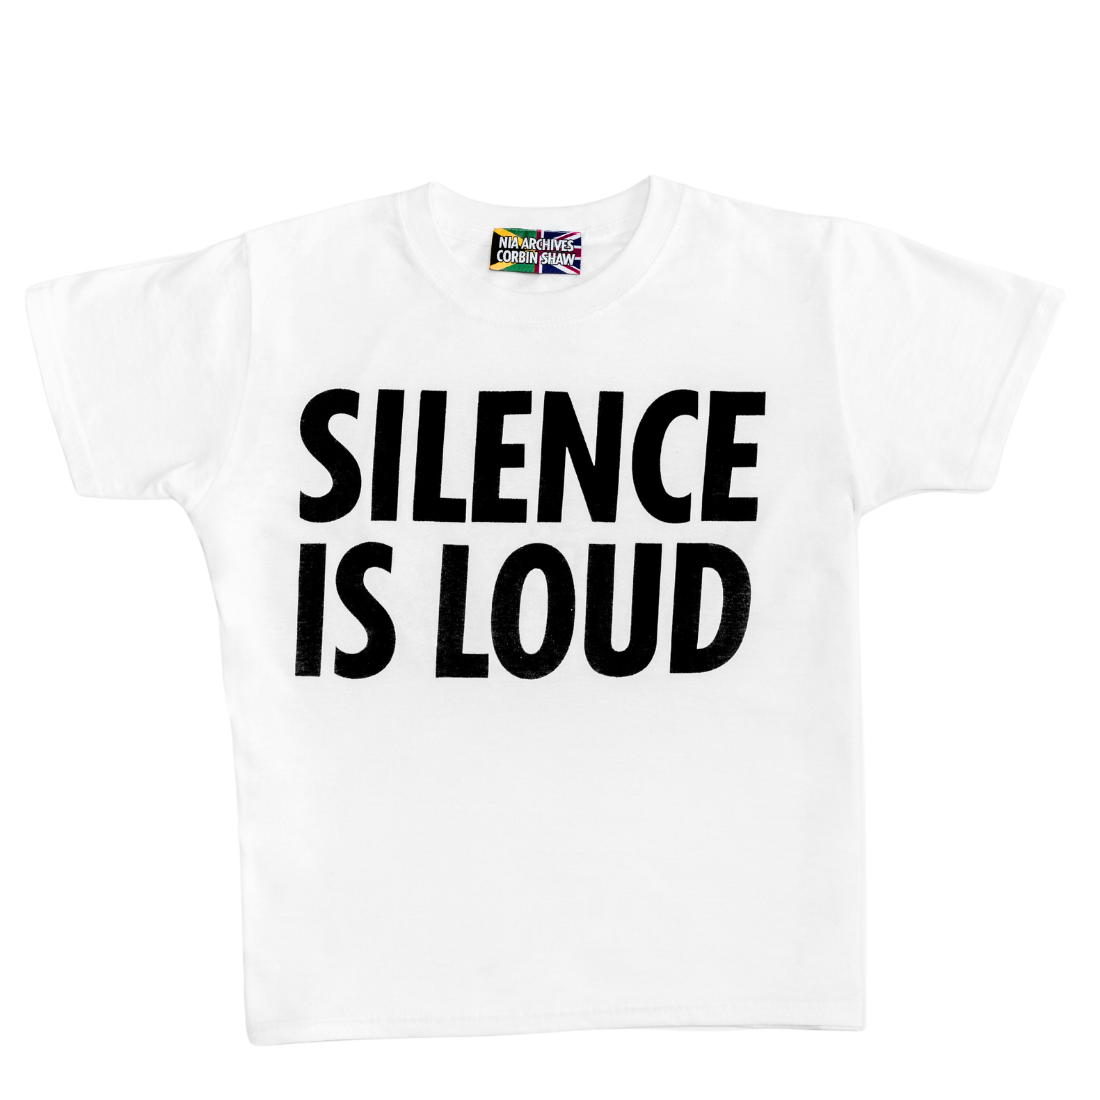 Silence Is Loud: Limited Corbin Shaw Cassette, Corbin Shaw T-Shirt + Signed 4" Art Card